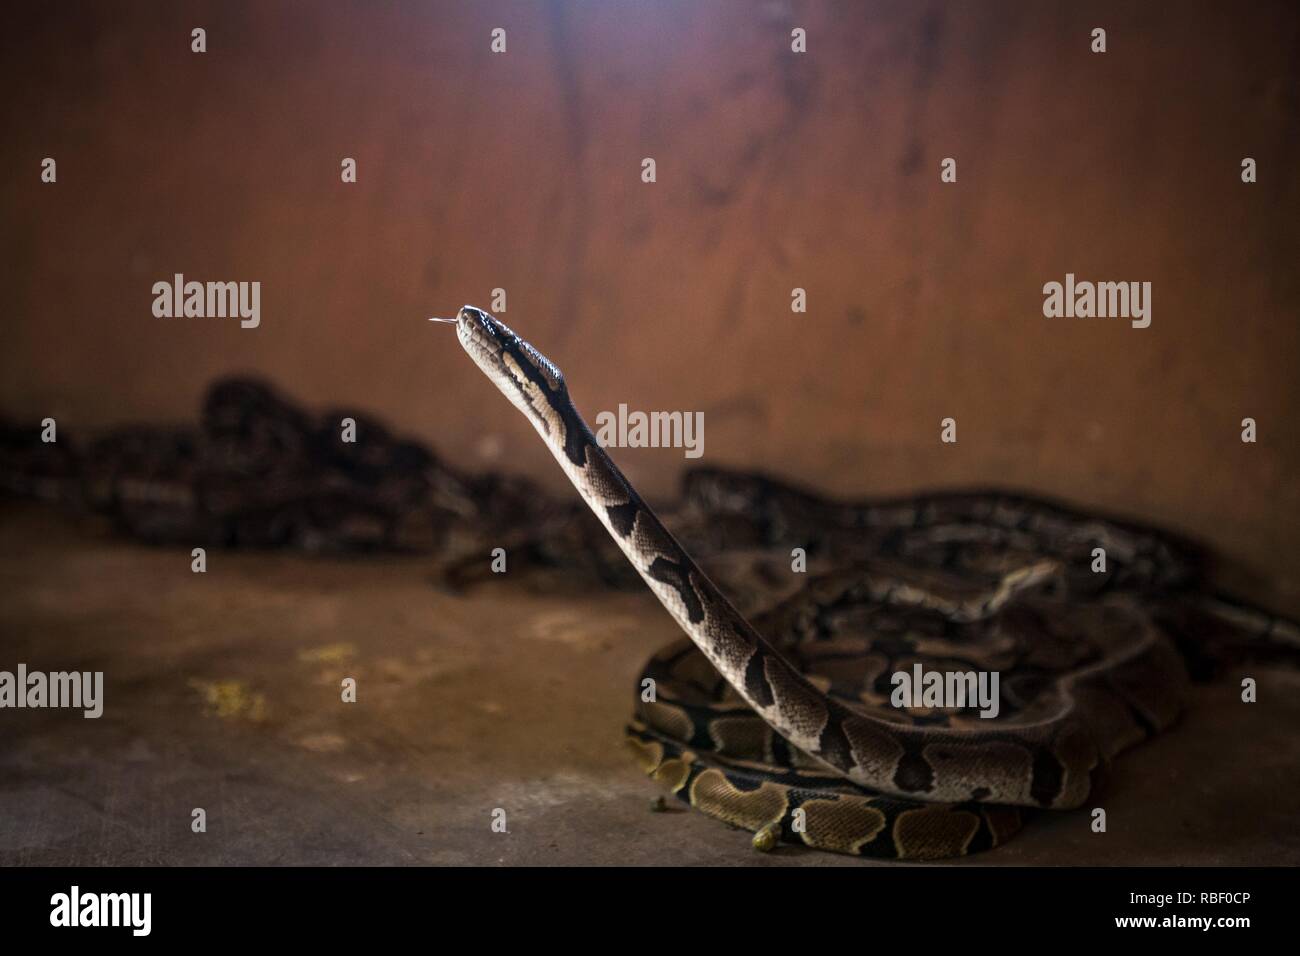 Royal Python Tempel (Tempel des pythons) in Ouidah, Benin, Afrika. Stockfoto